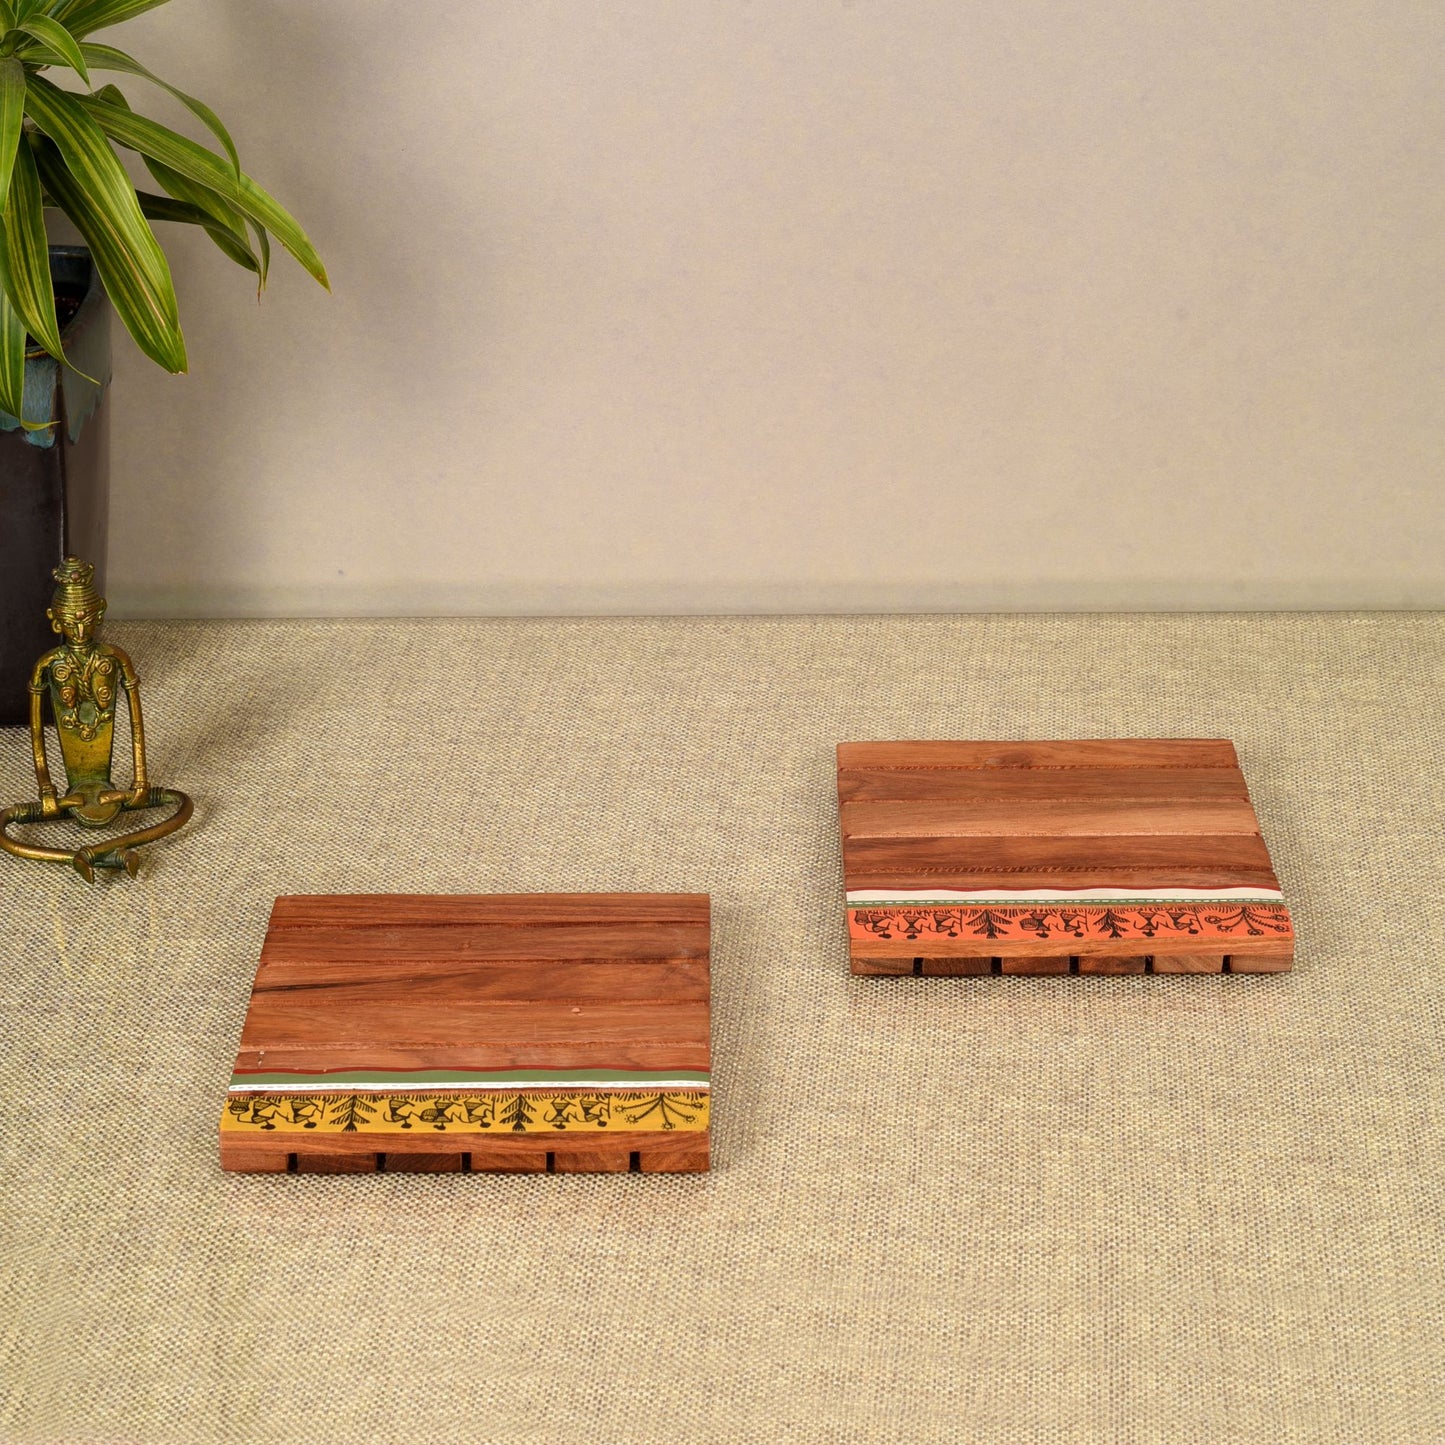 Wooden Trivets Set